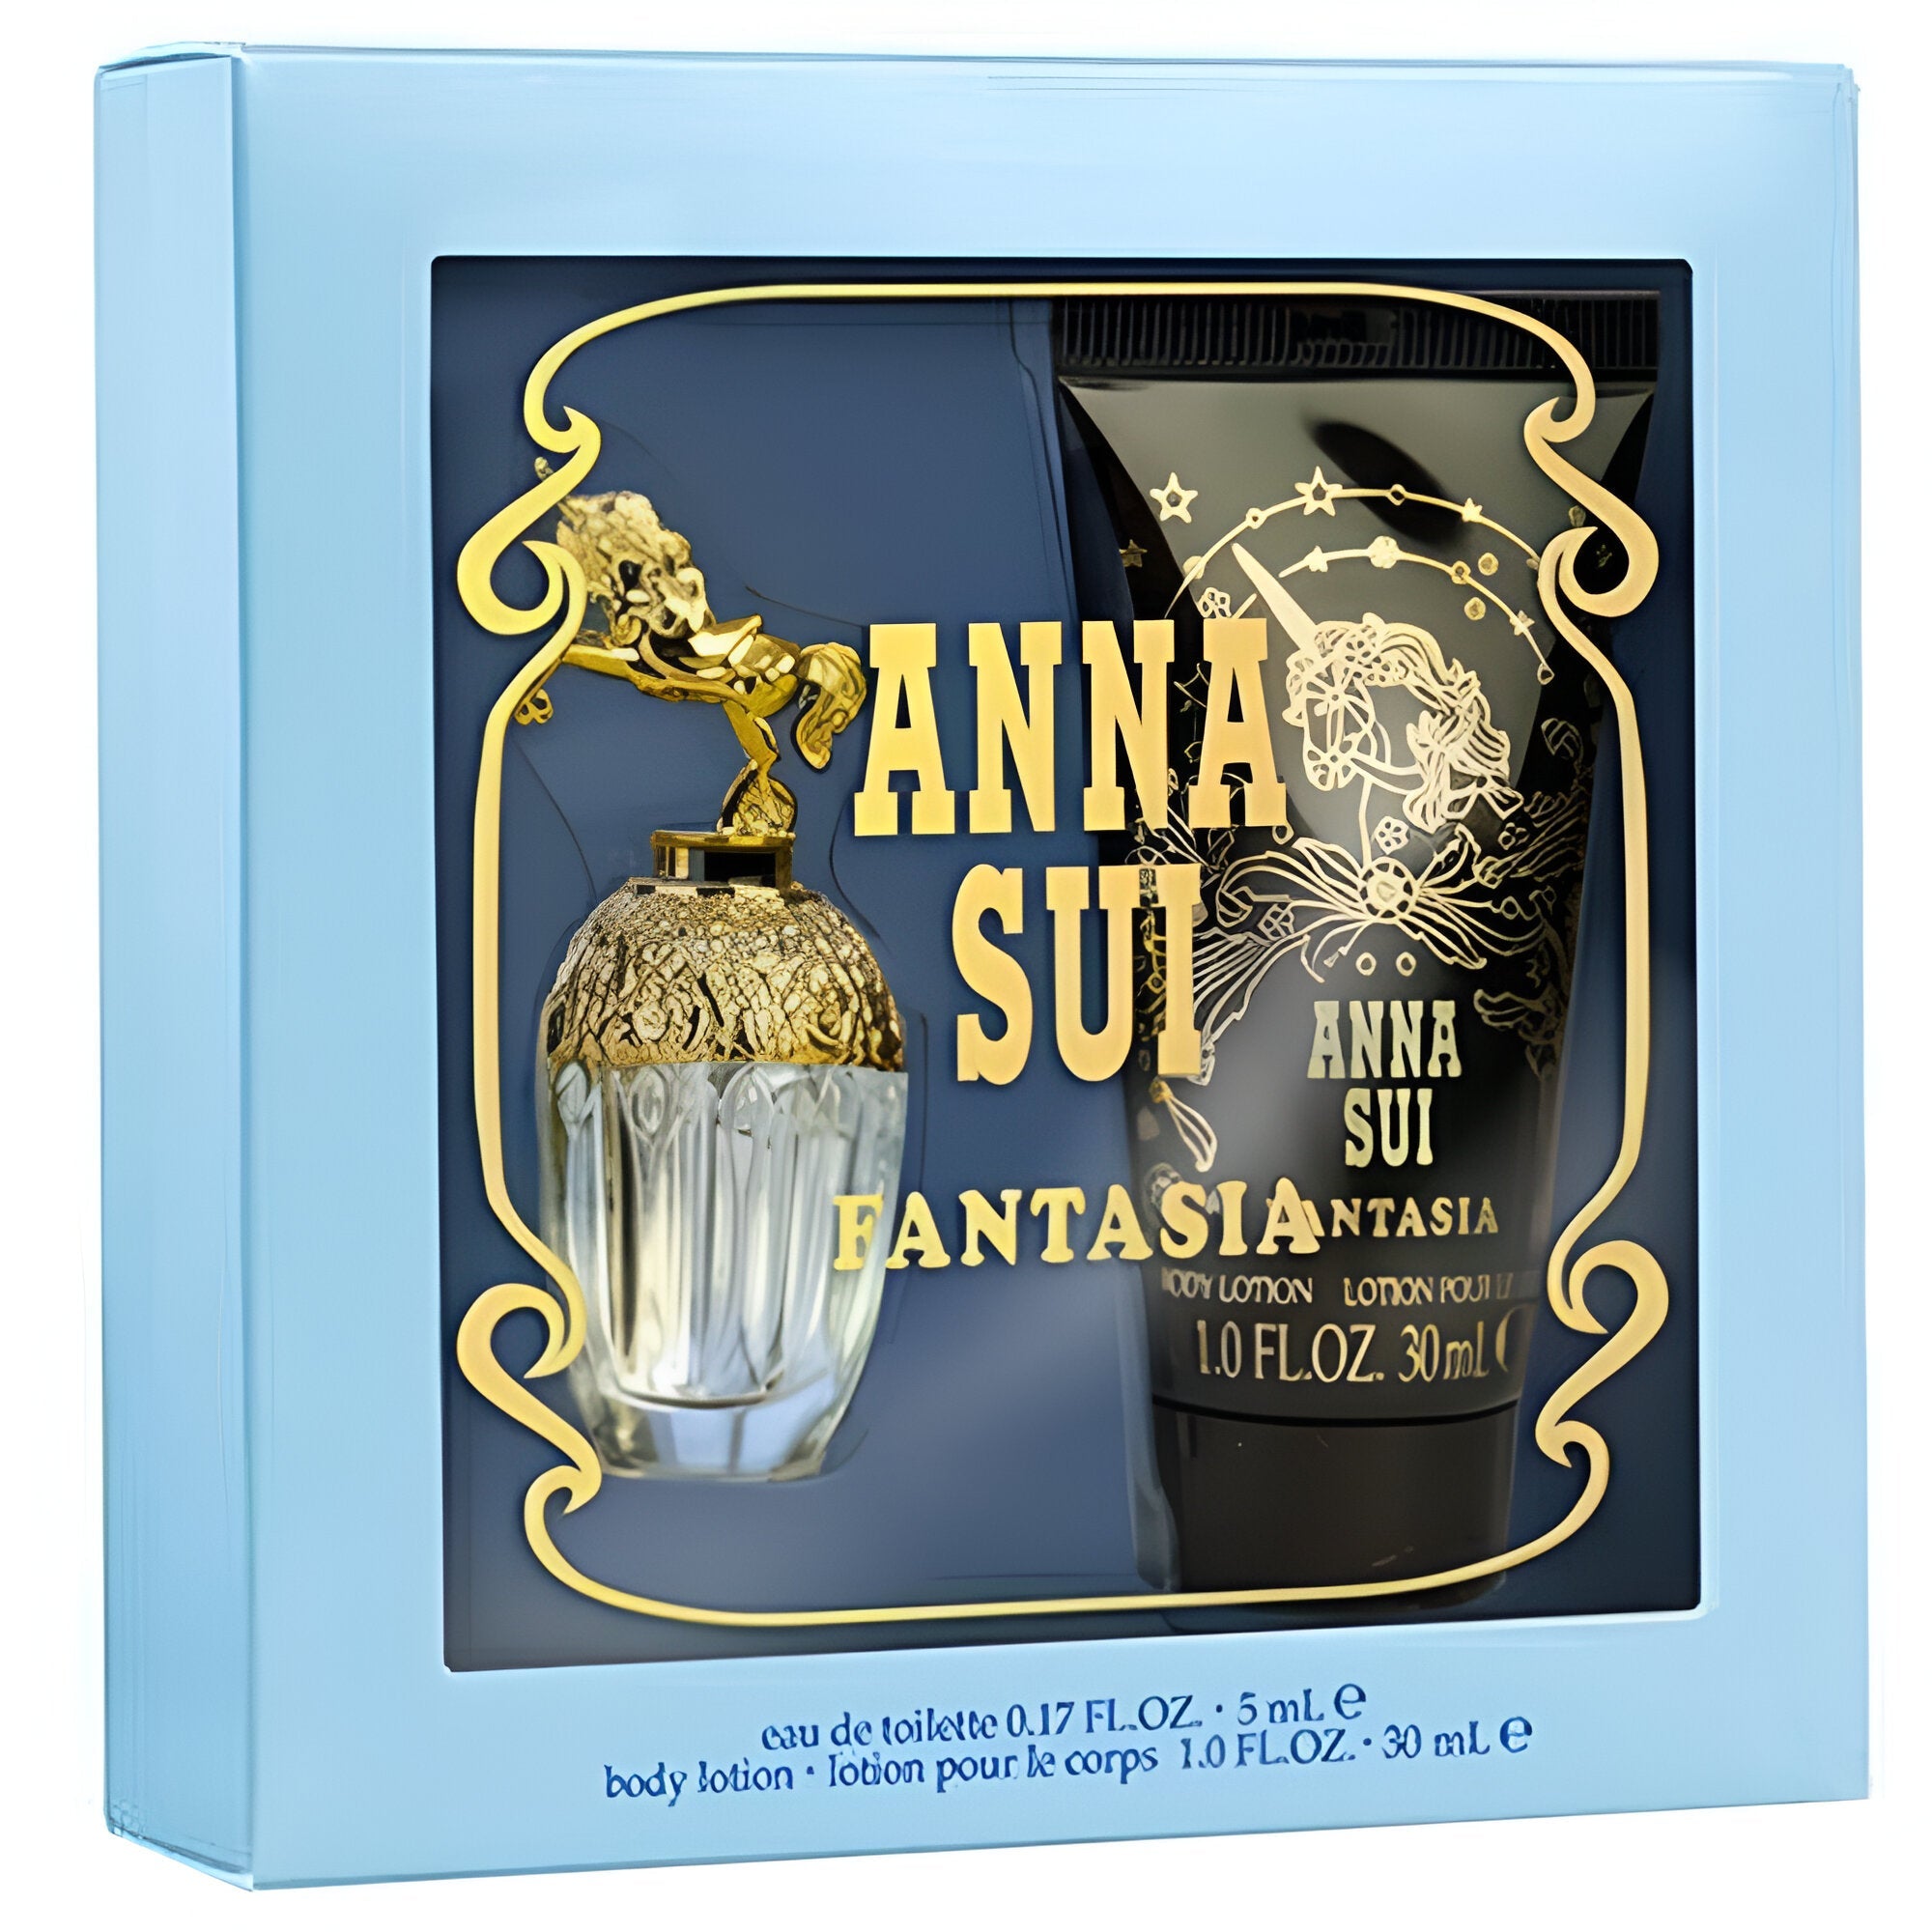 Anna Sui Fantasia Delight EDT Body Lotion Set | My Perfume Shop Australia